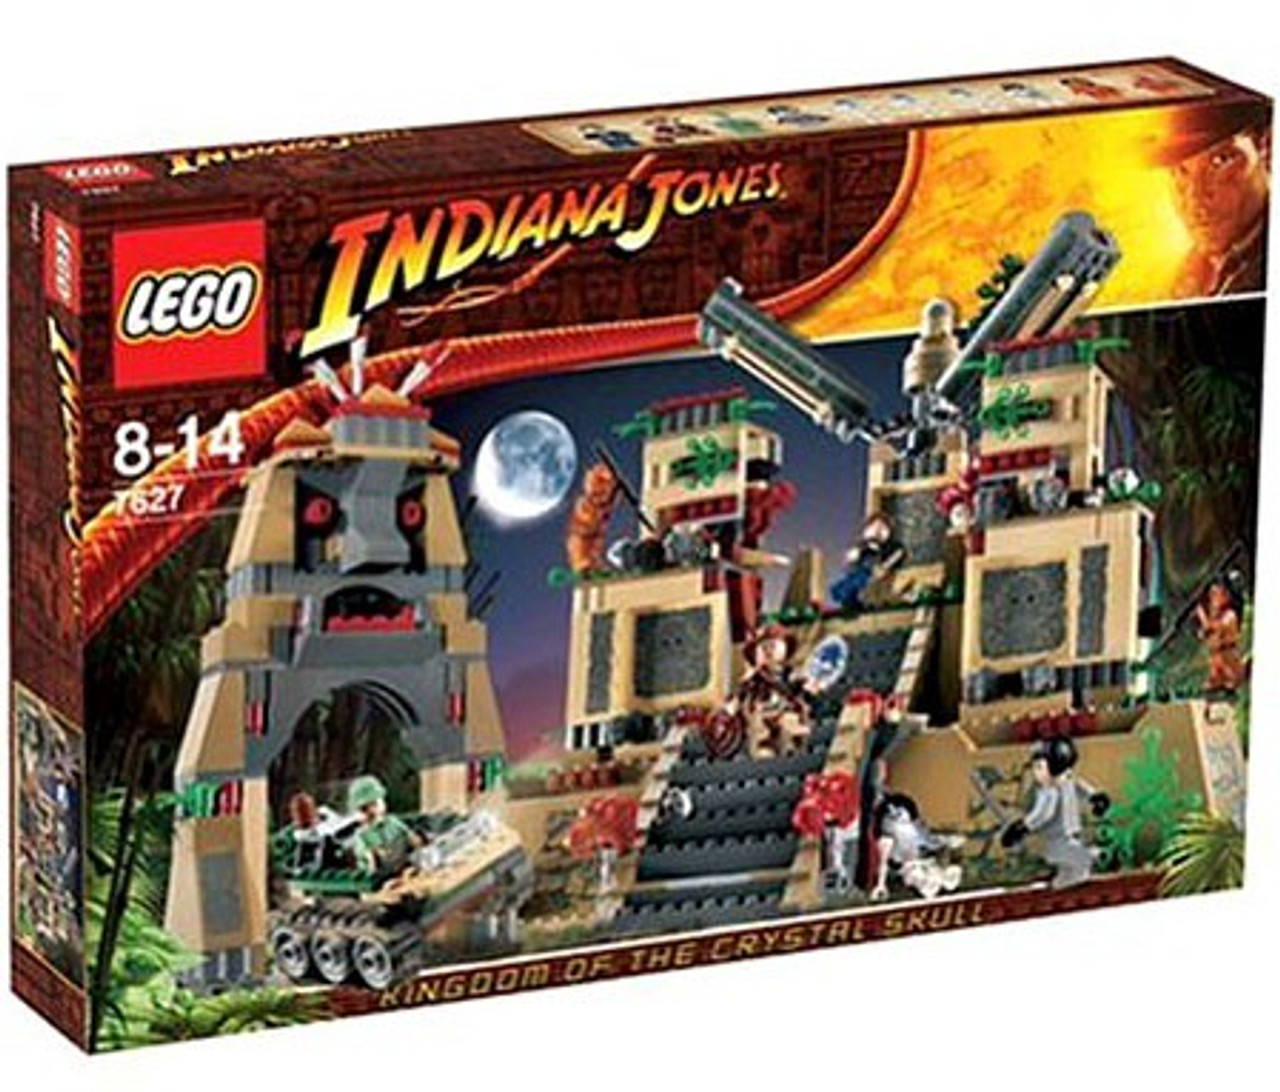 LEGO Indiana Jones Temple of the Crystal Skull Set 7627 ToyWiz